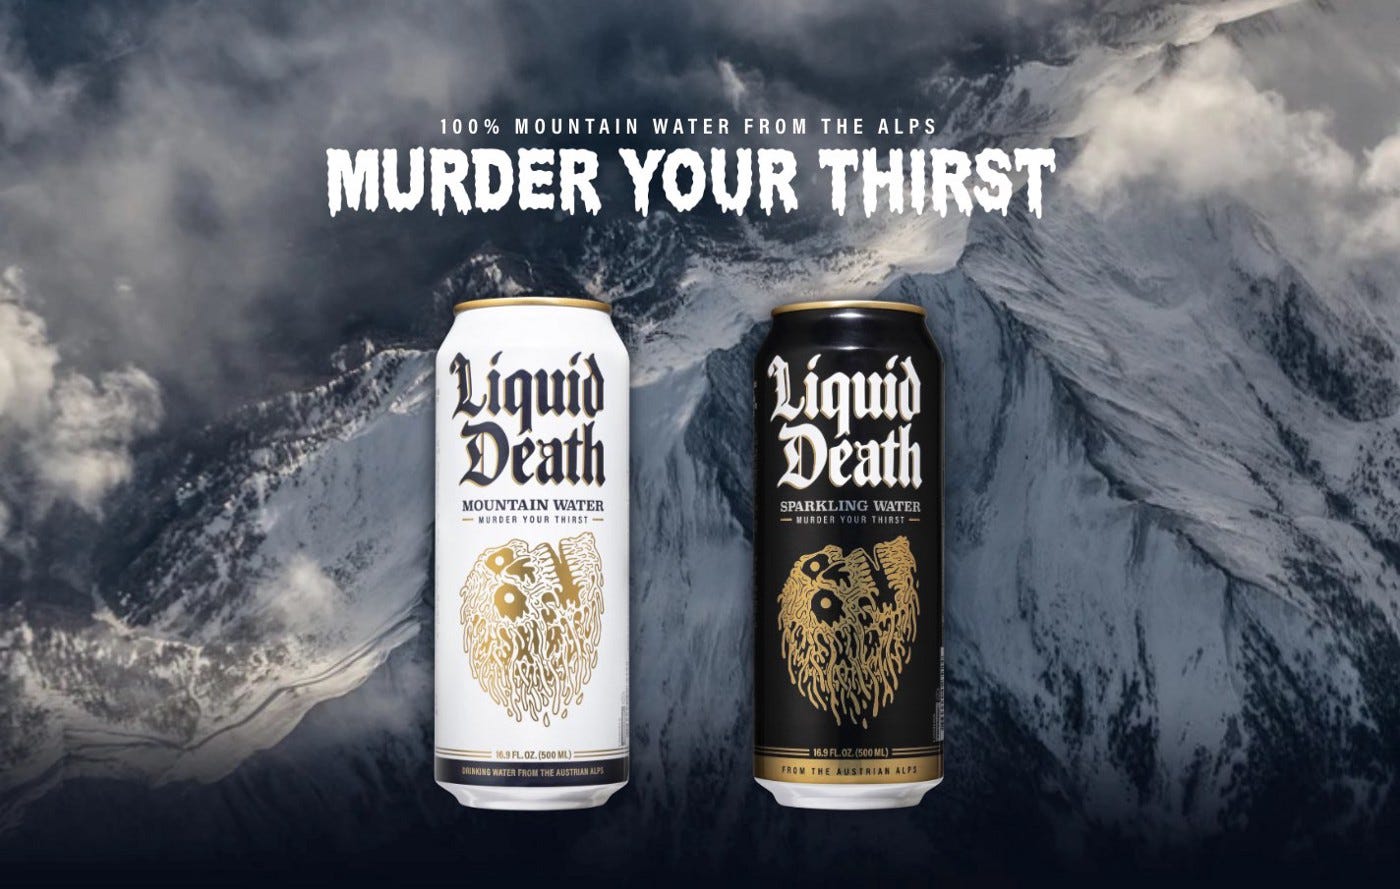 Liquid Death Has The Best Marketing in Water | by Gregory Yellin | Medium